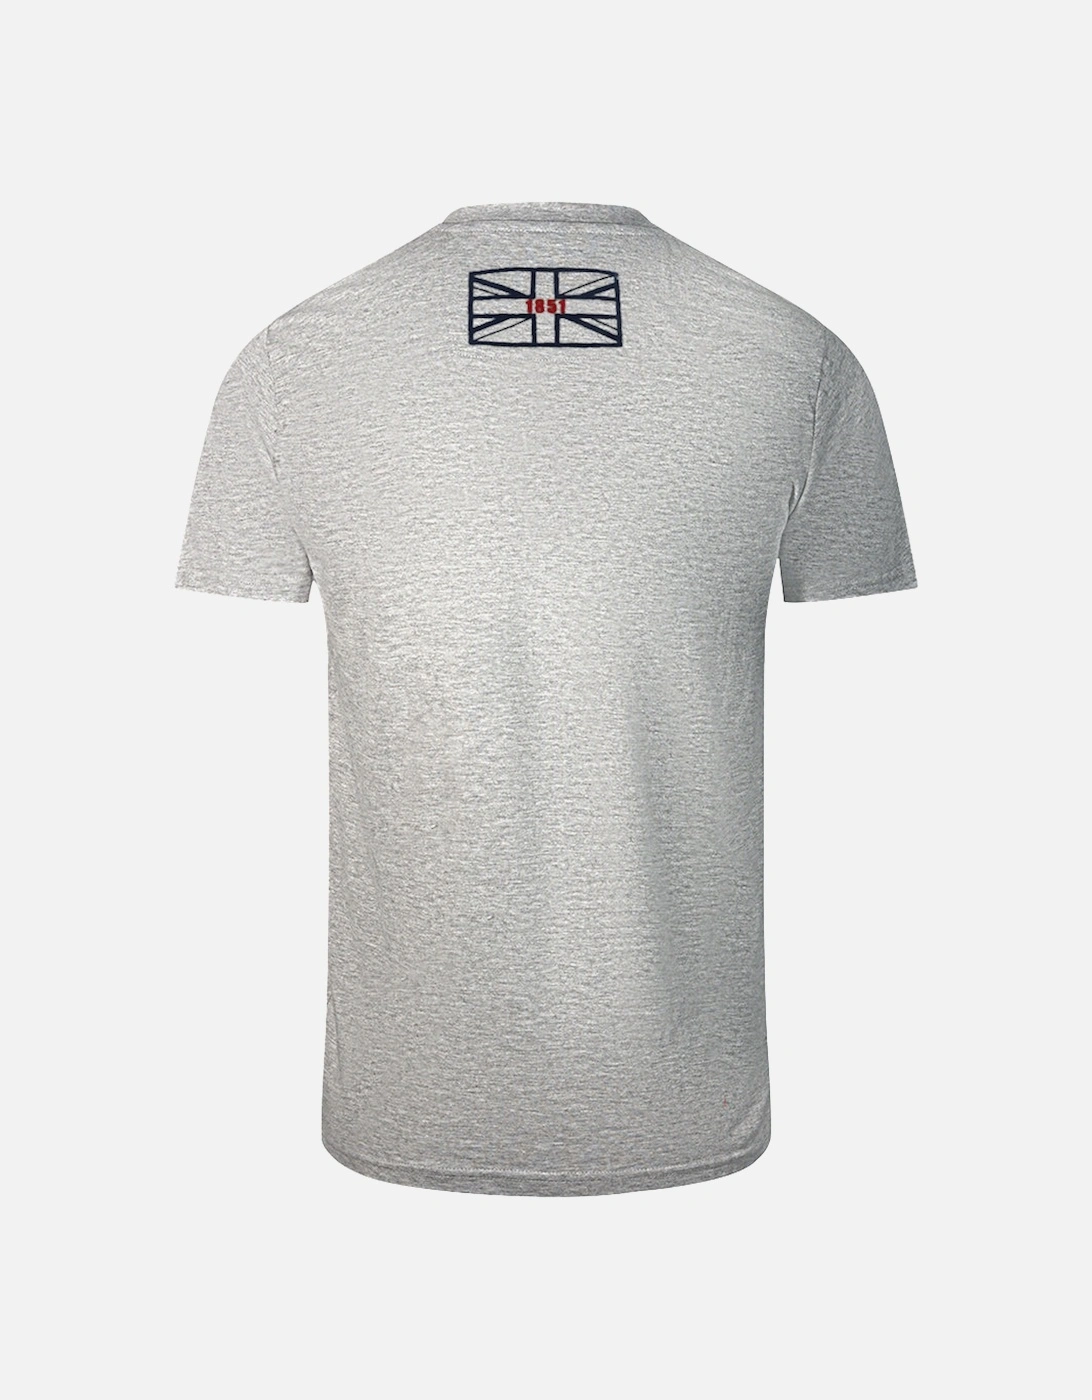 London Circle Logo Grey T-Shirt